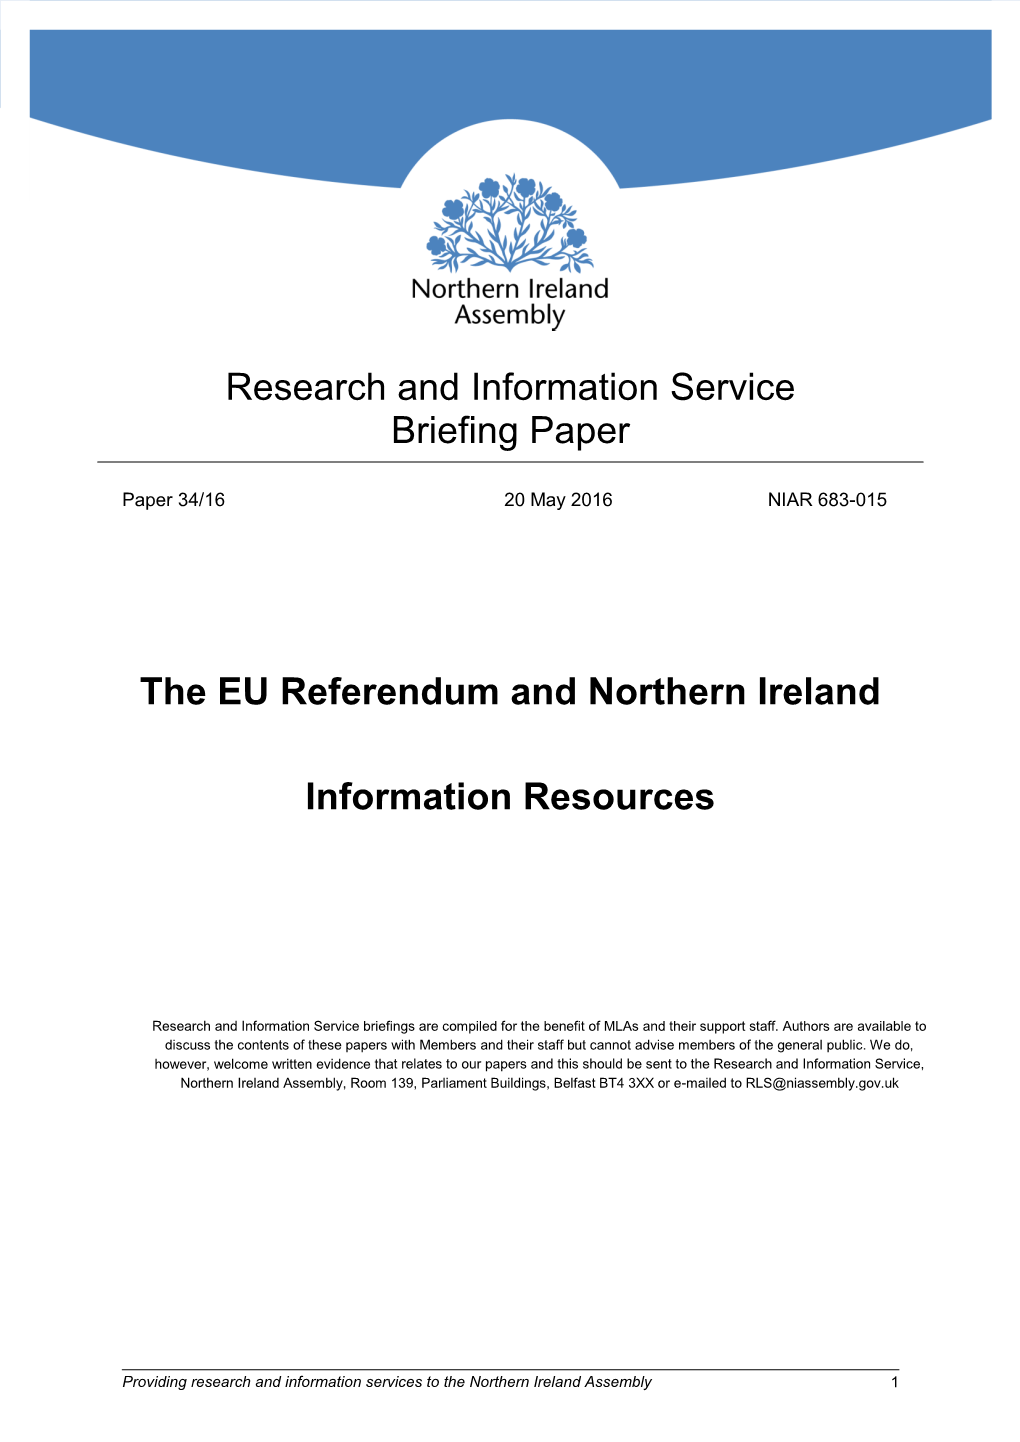 The EU Referendum and Northern Ireland